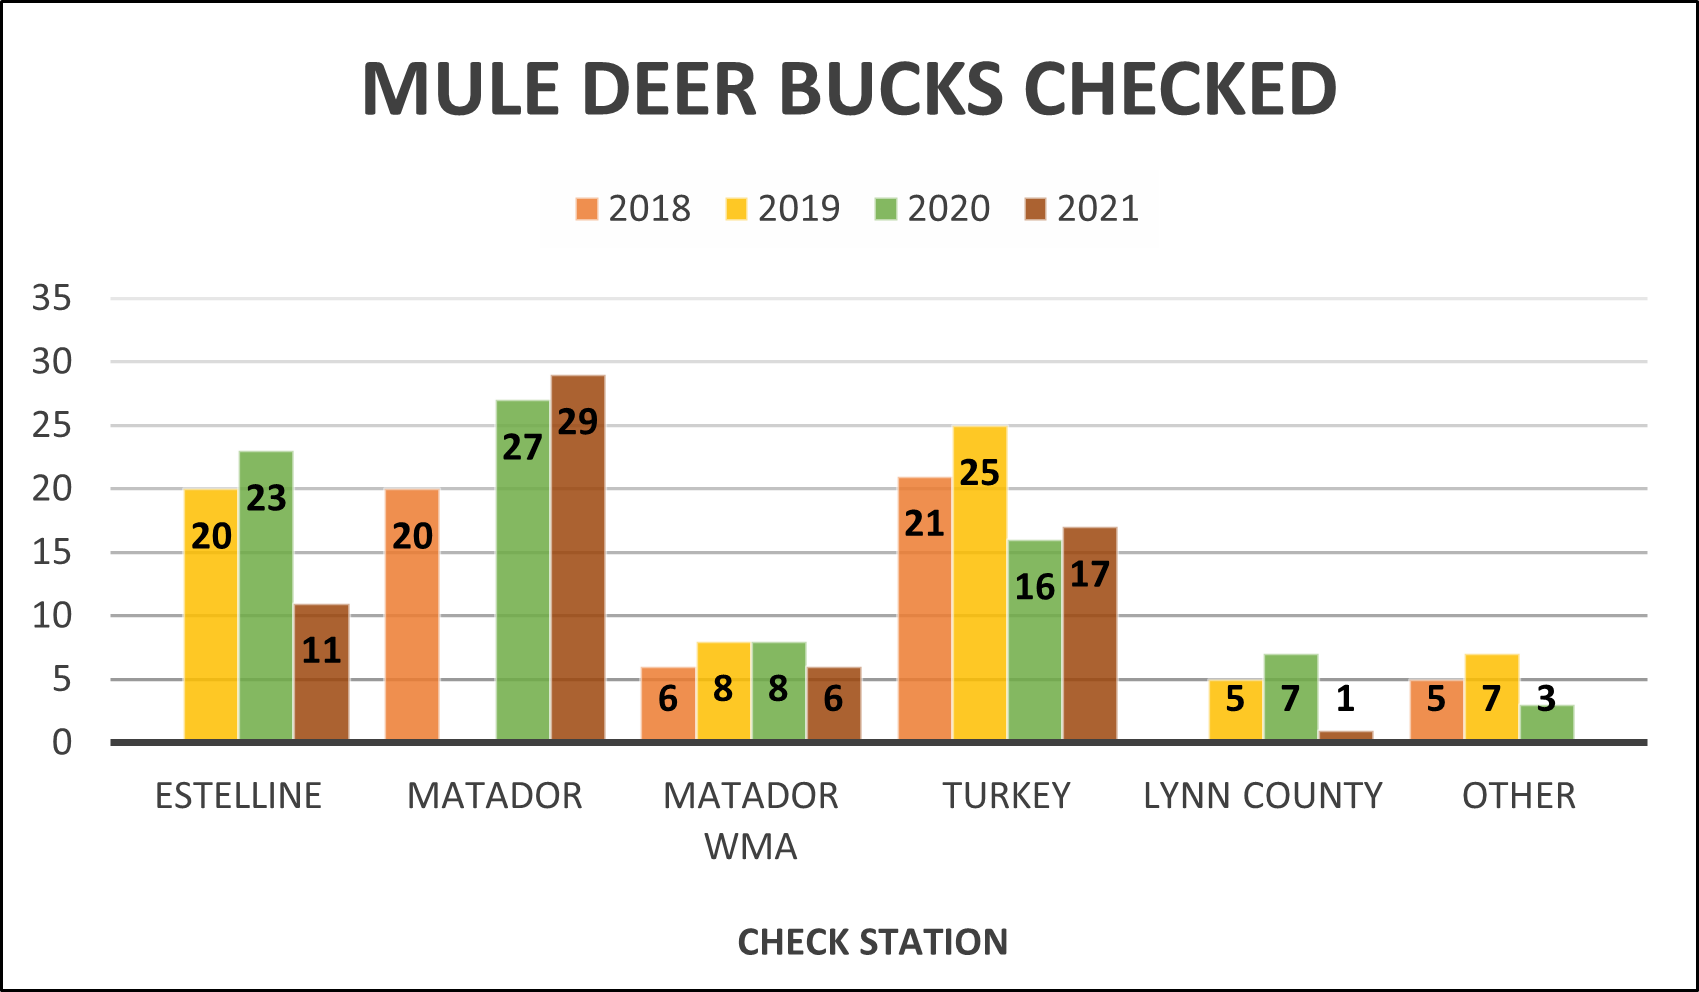 The number of mule deer bucks checked chart